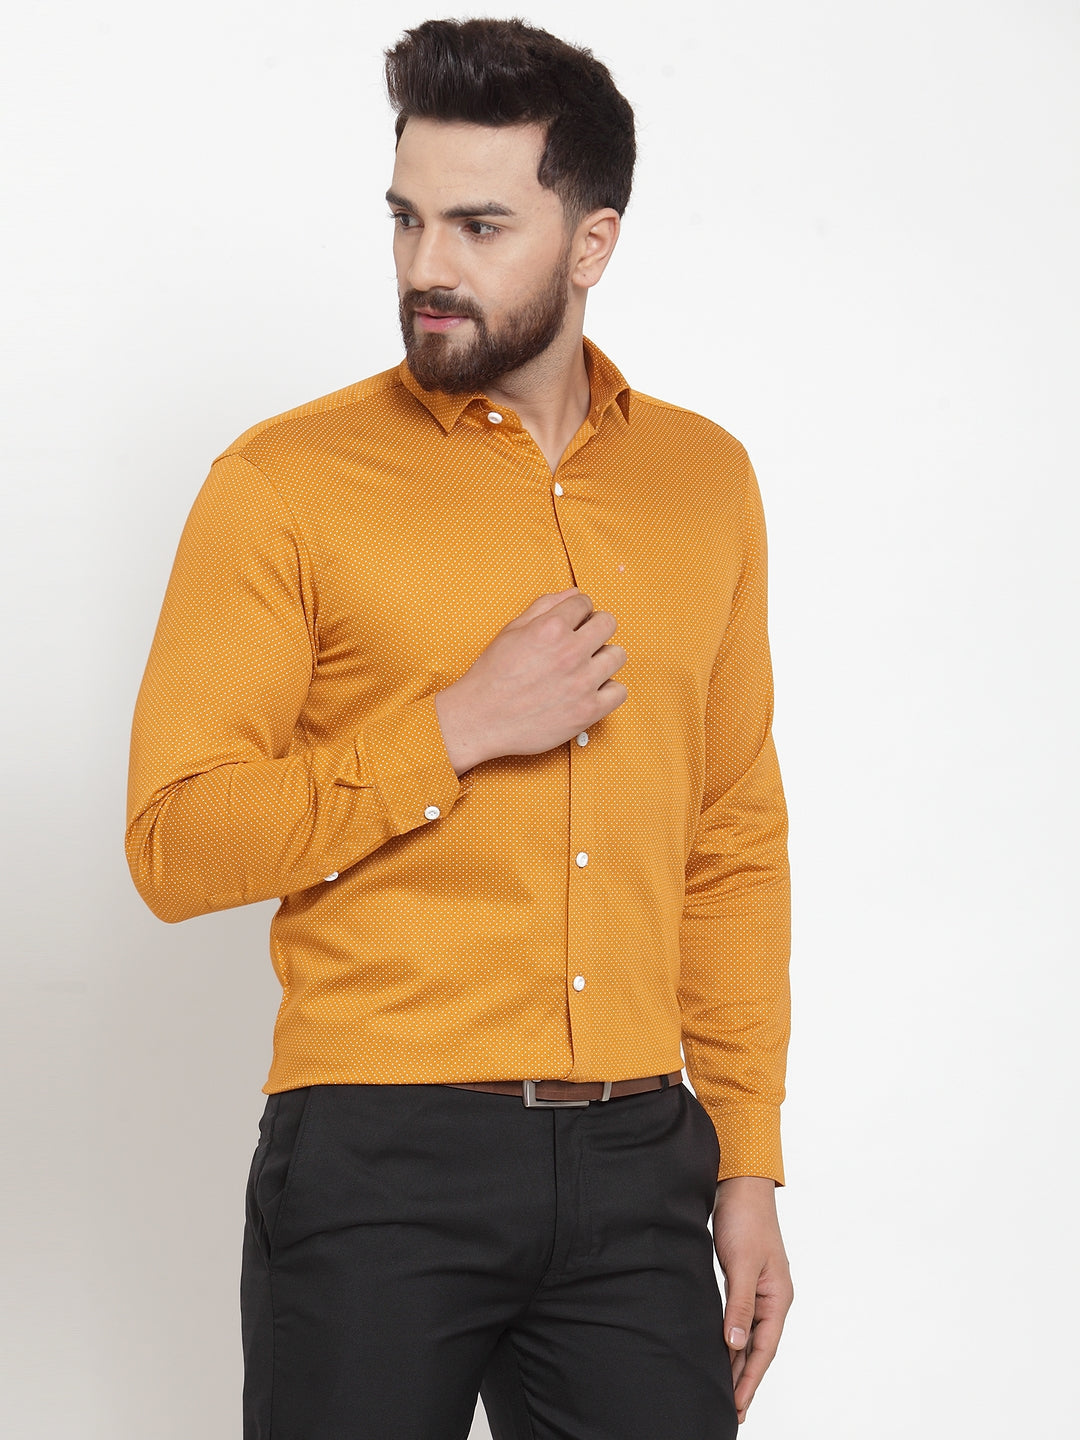 Men's Yellow Cotton Polka Dots Formal Shirts ( SF 736Mustard ) - Jainish